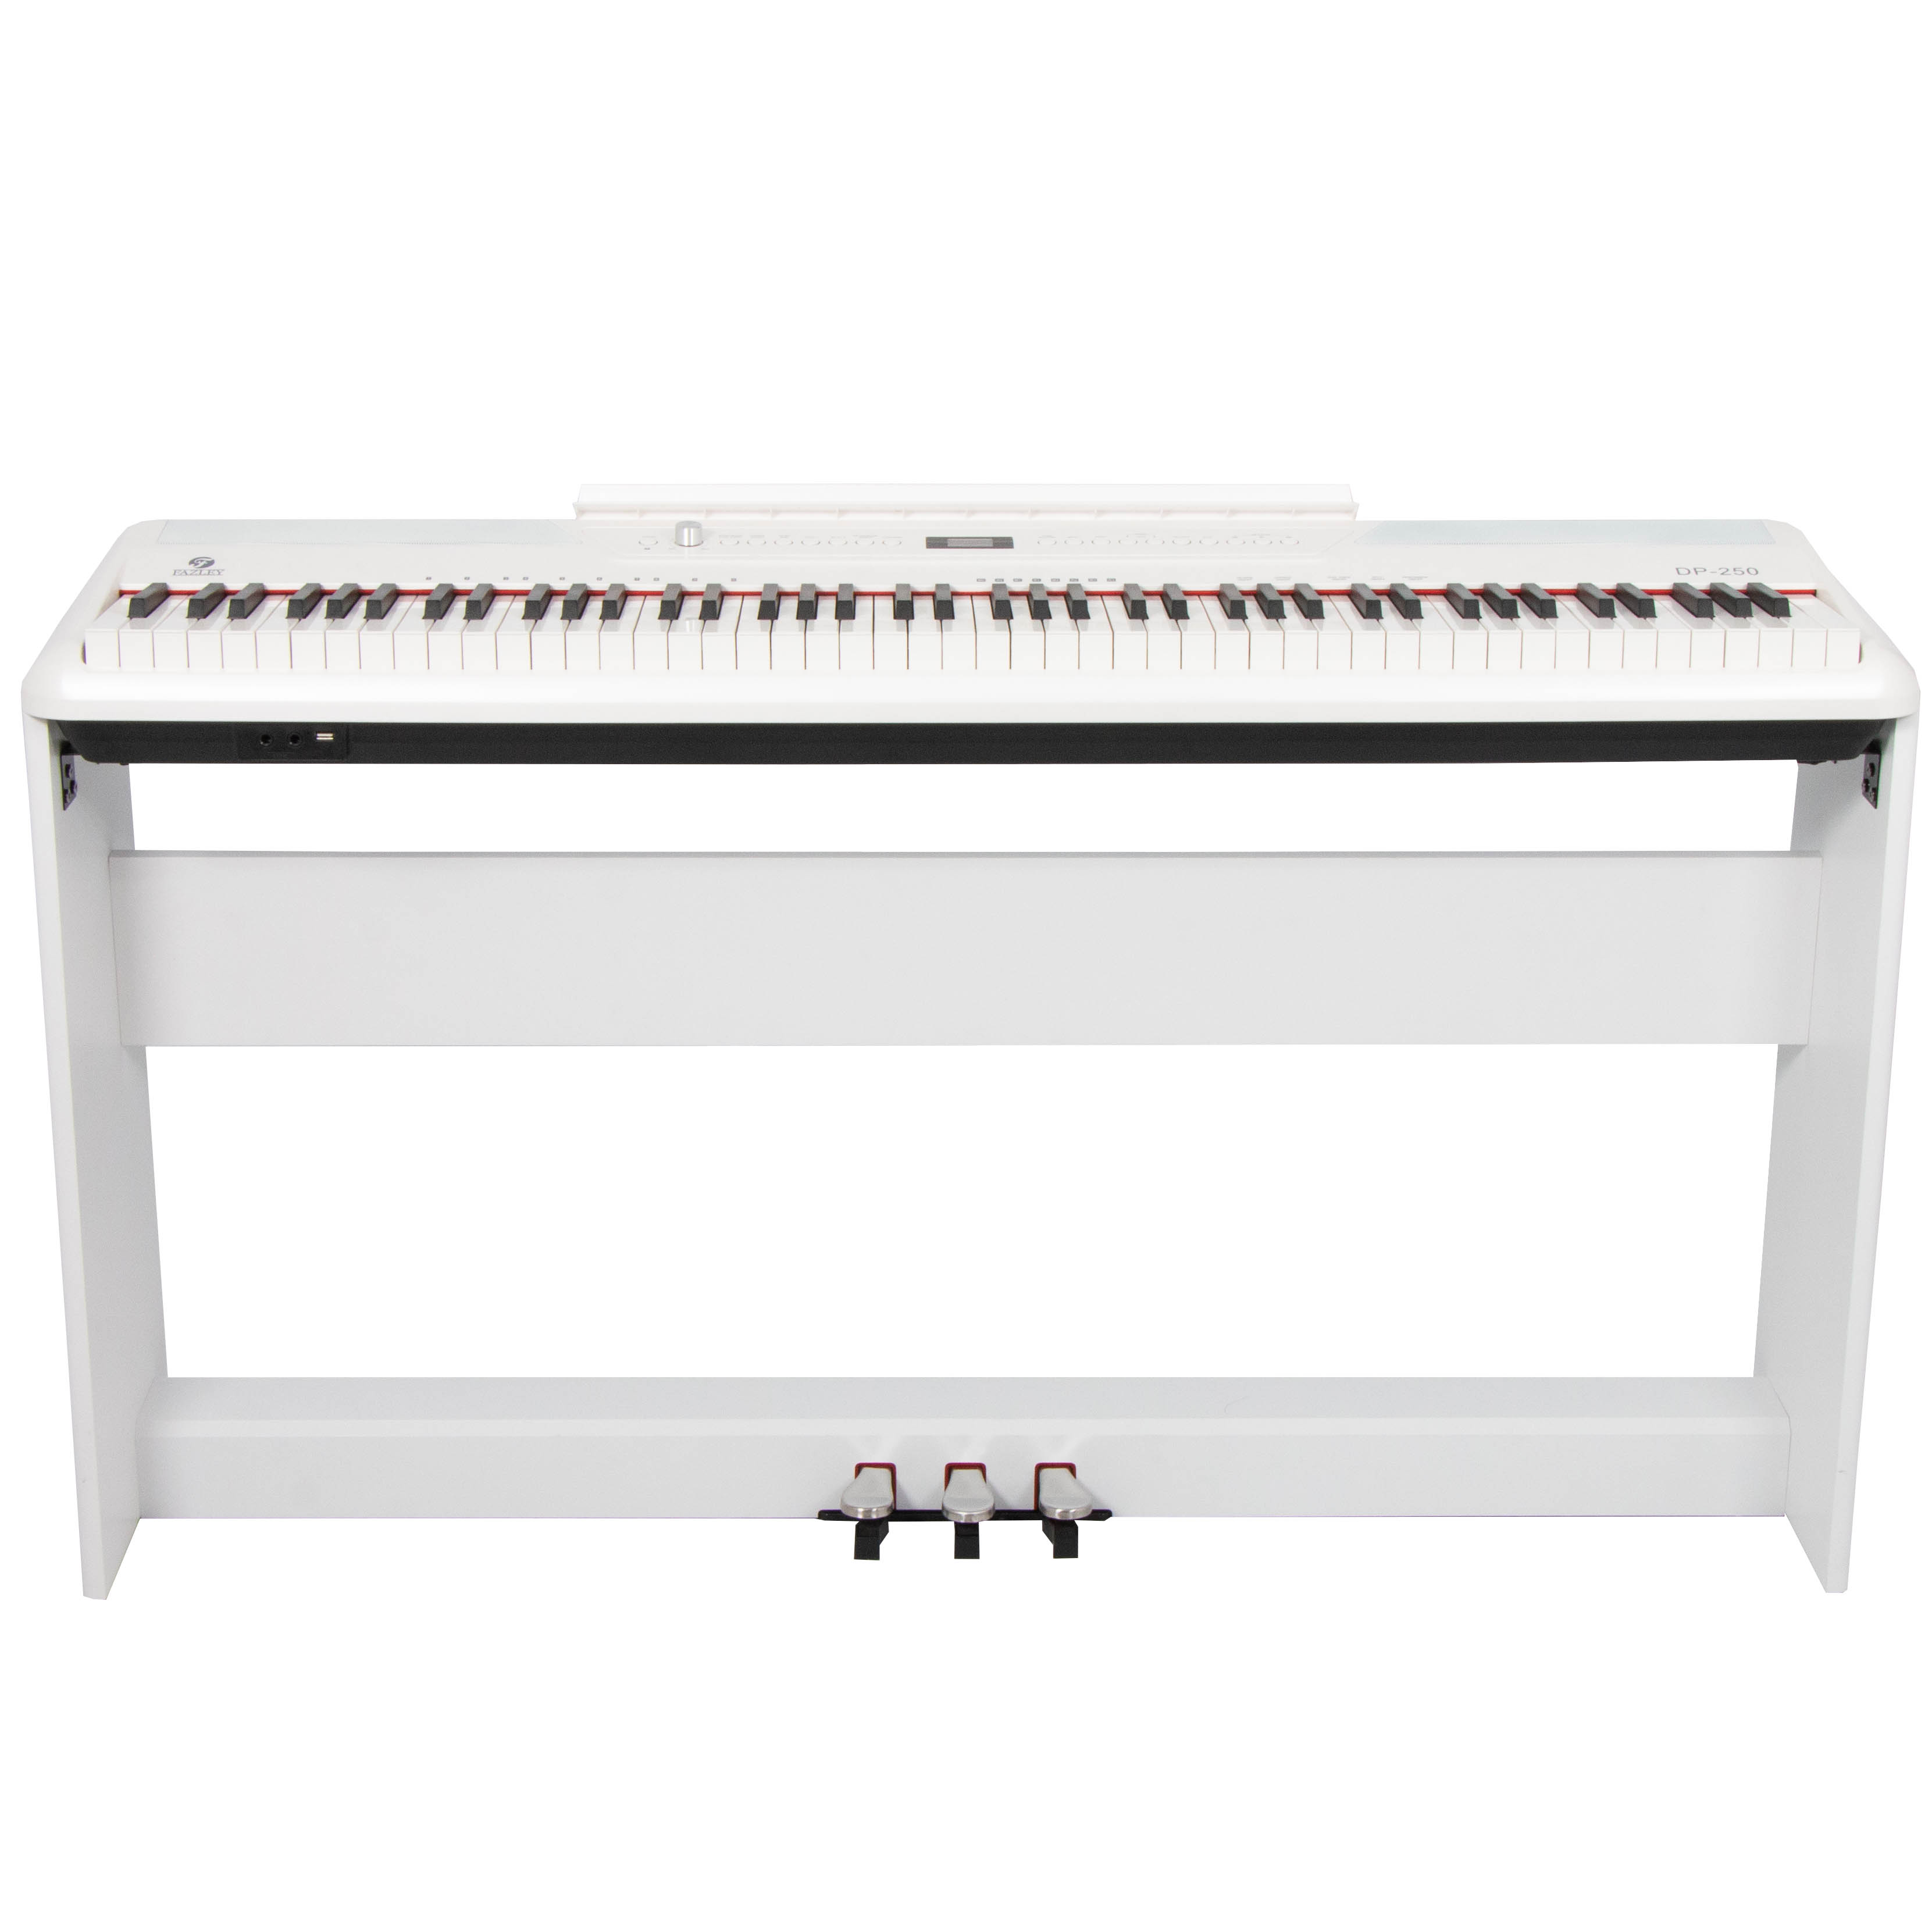 Fazley DP-250-WH + ST1 digitale piano - Wit